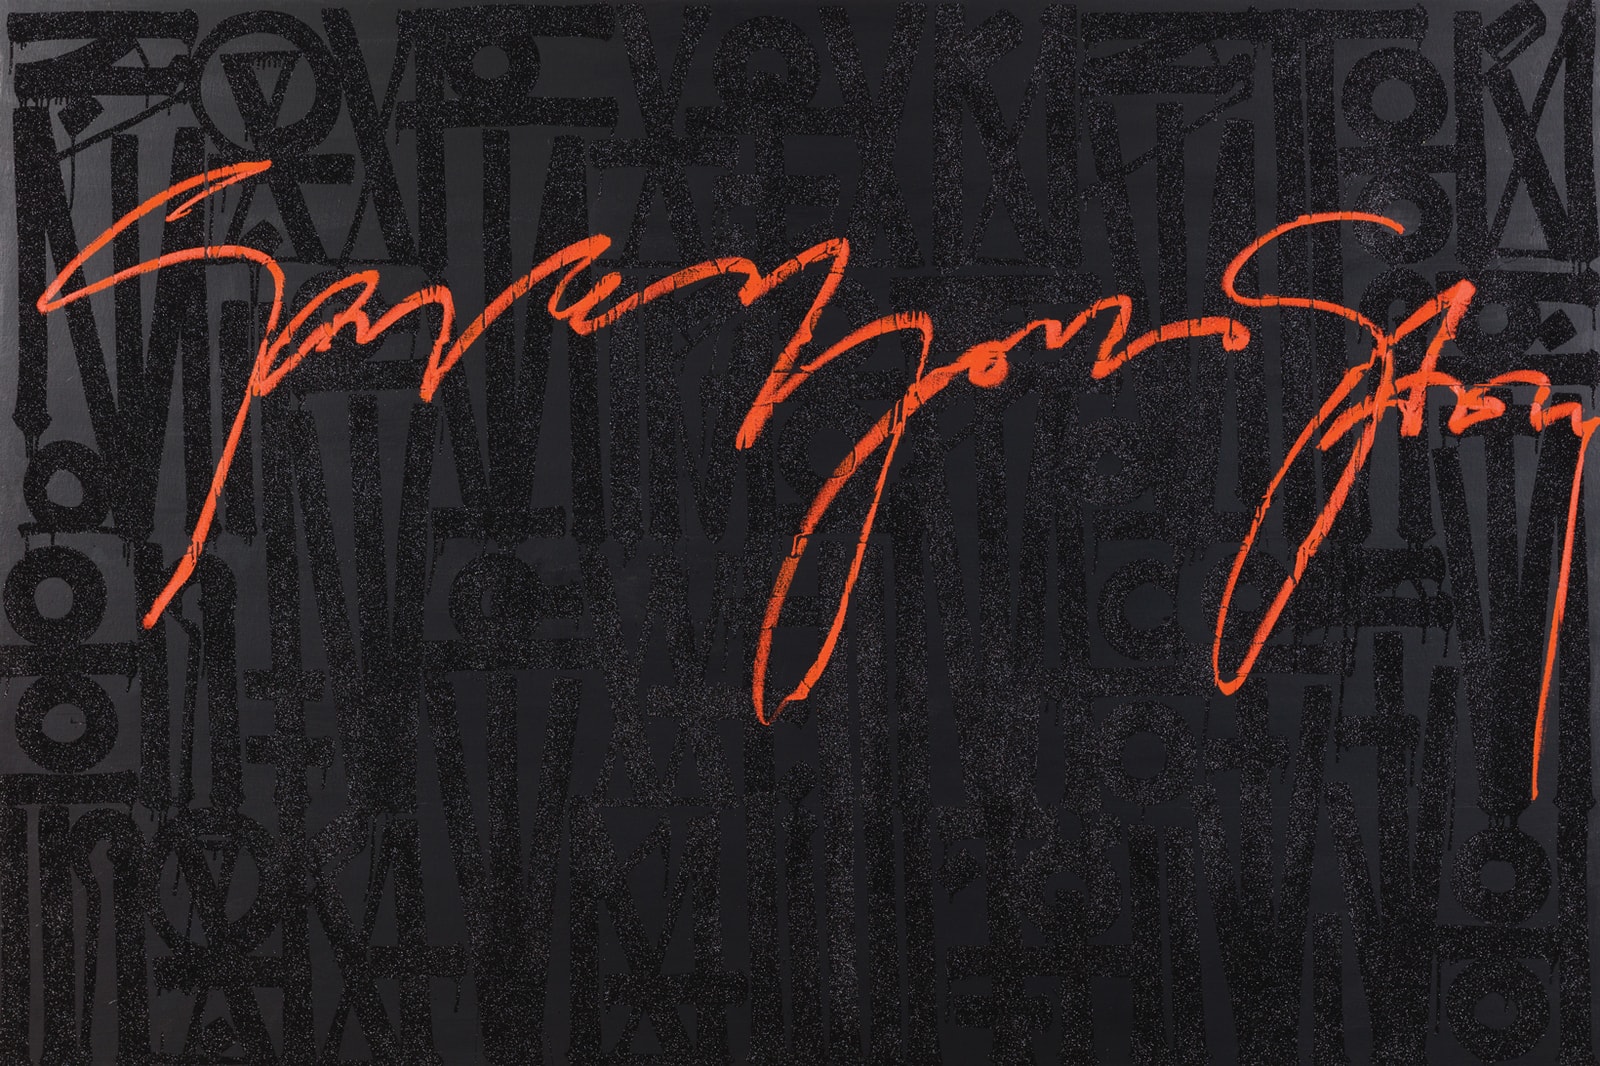 RETNA Margraves Solo Exhibition Maddox Gallery London United Kingdom Art Artwork Graffiti Calligraphy